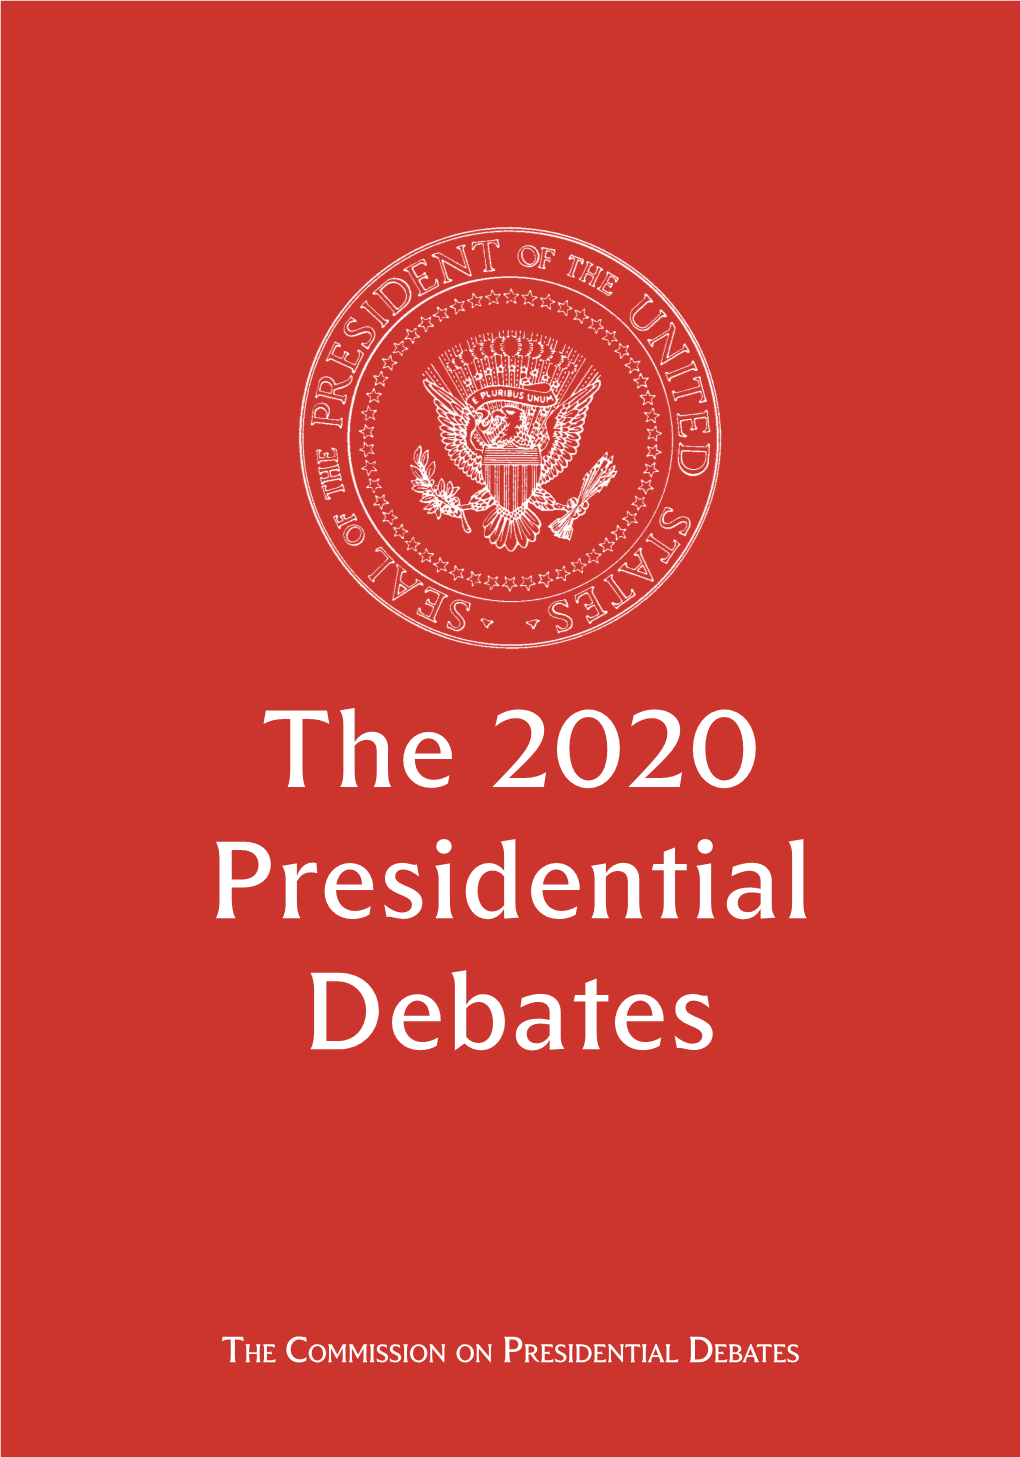 The 2020 Presidential Debates